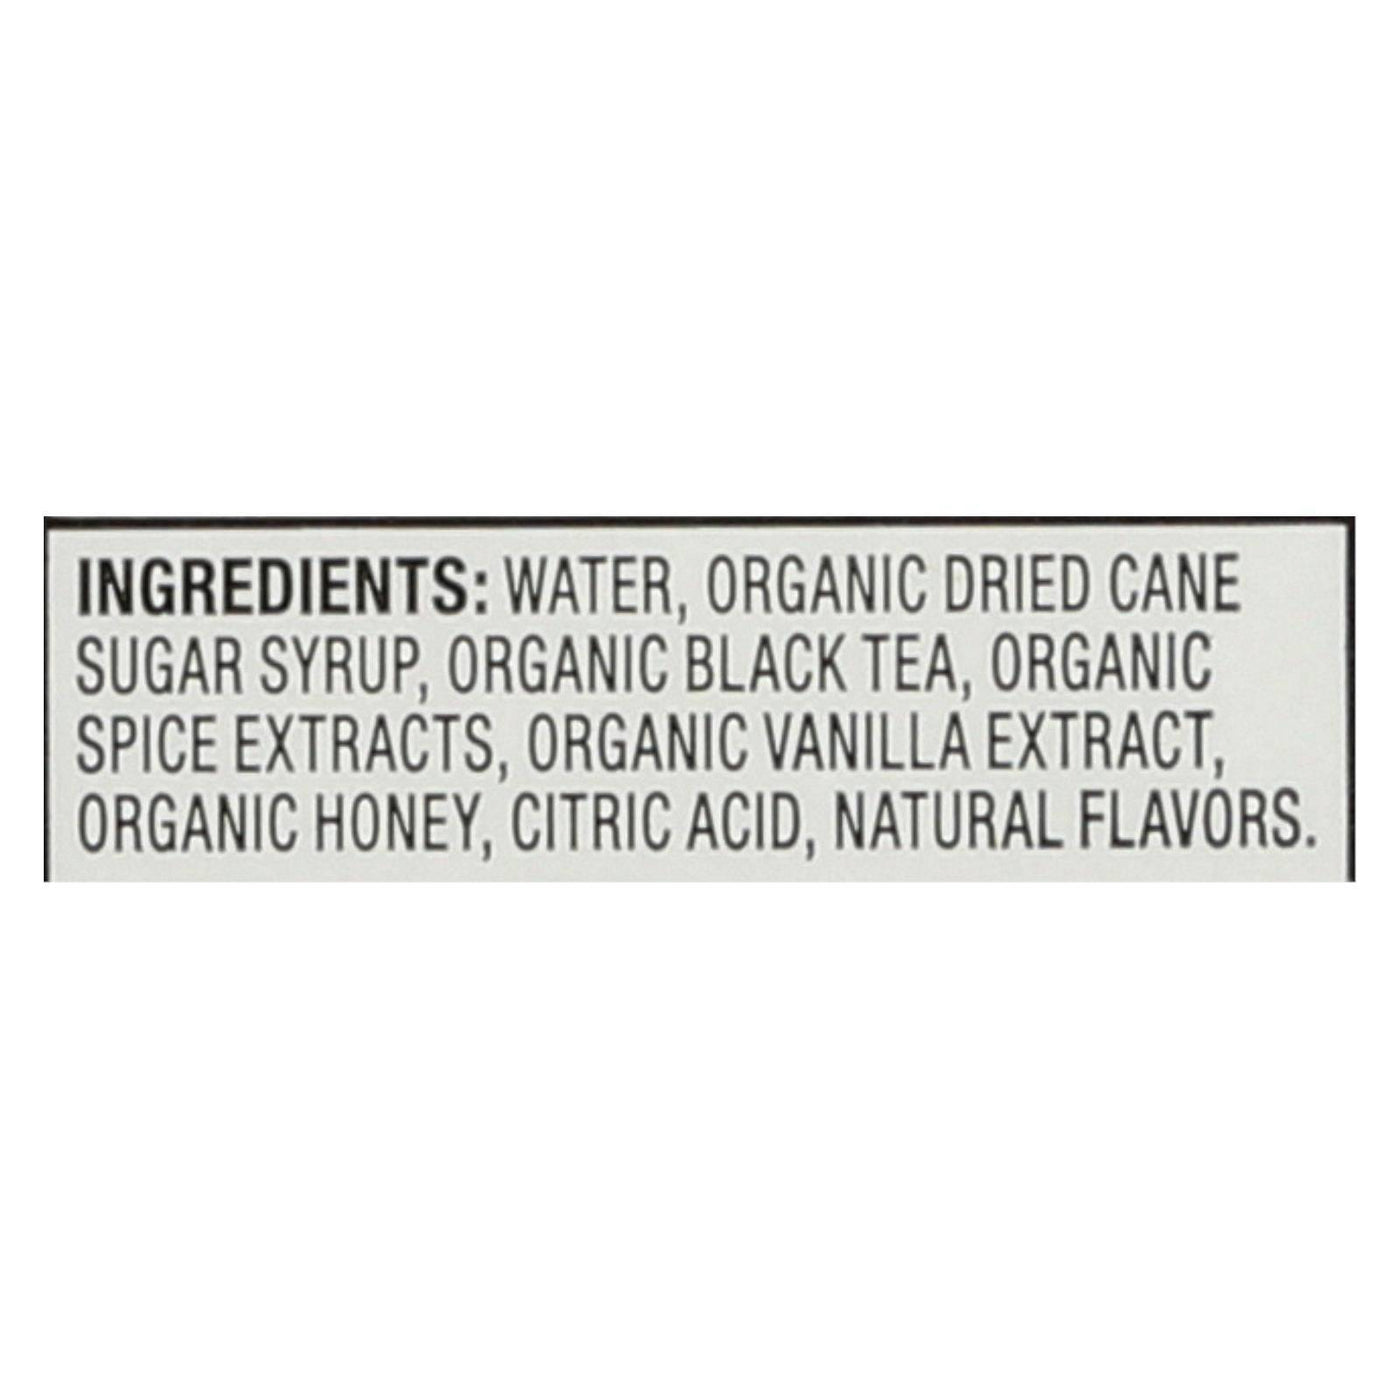 Oregon Chai Original Chai Tea Latte Concentrate - Slightly Sweet - Case Of 6 - 32 Fl Oz. | OnlyNaturals.us